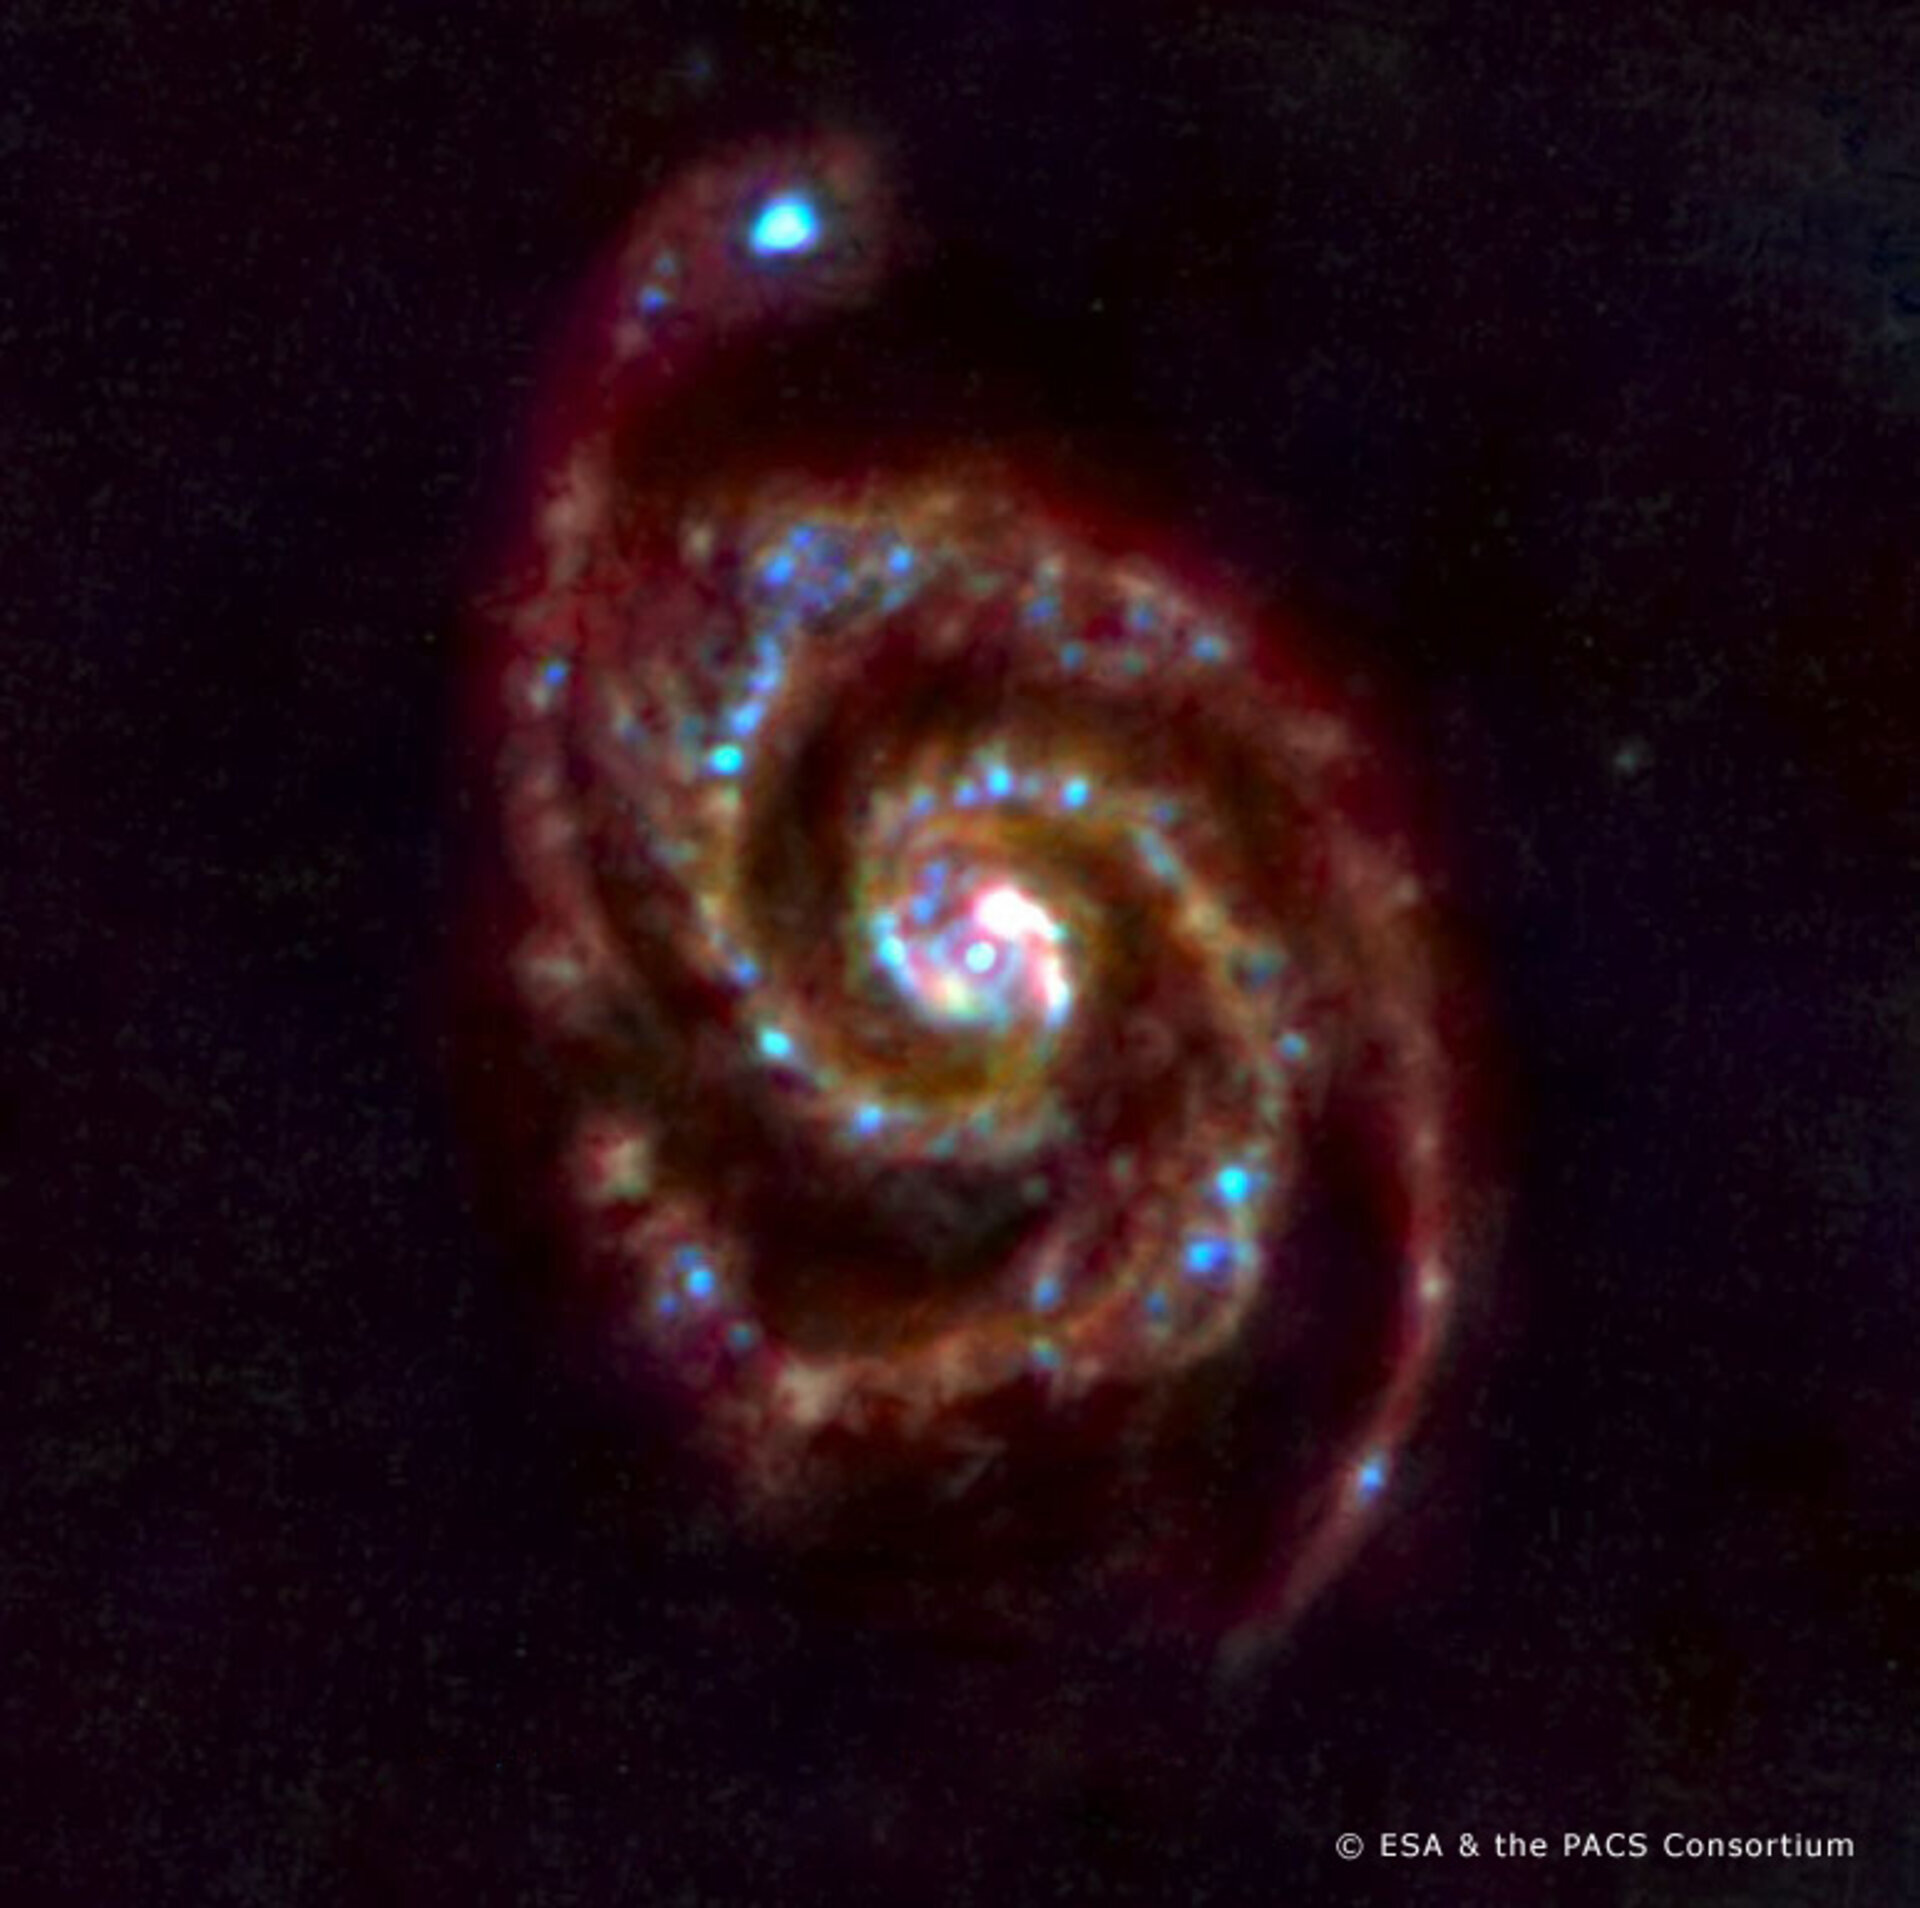 Spiralgalaksen Messier 51 fotografert av ESAs nye romteleskop Herschel